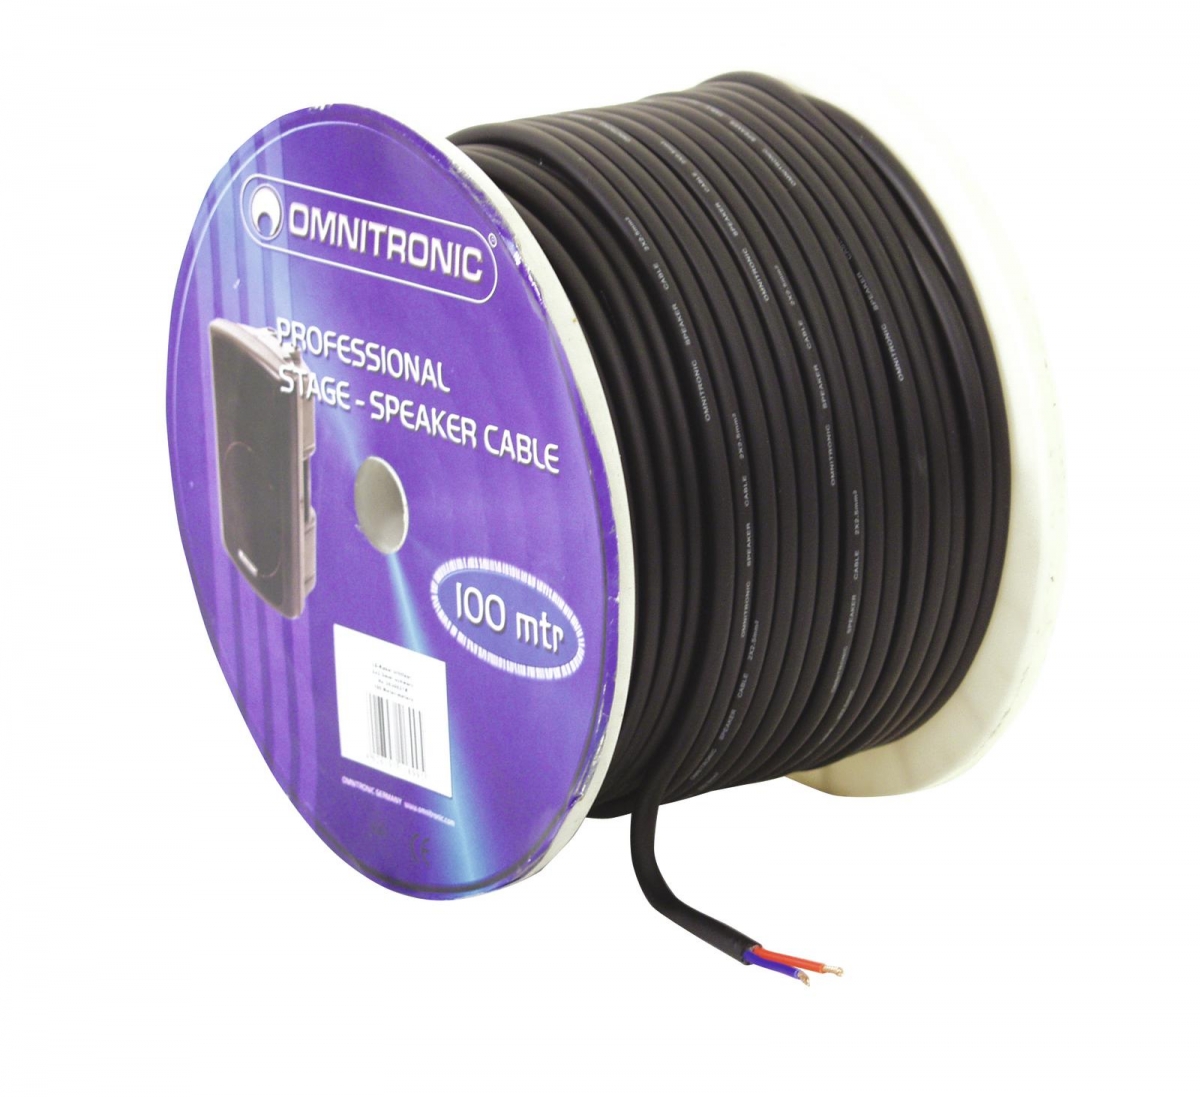 OMNITRONICSpeaker cable 2x2.5 50m bk durable-Price for 50 meterArticle-No: 3030021L